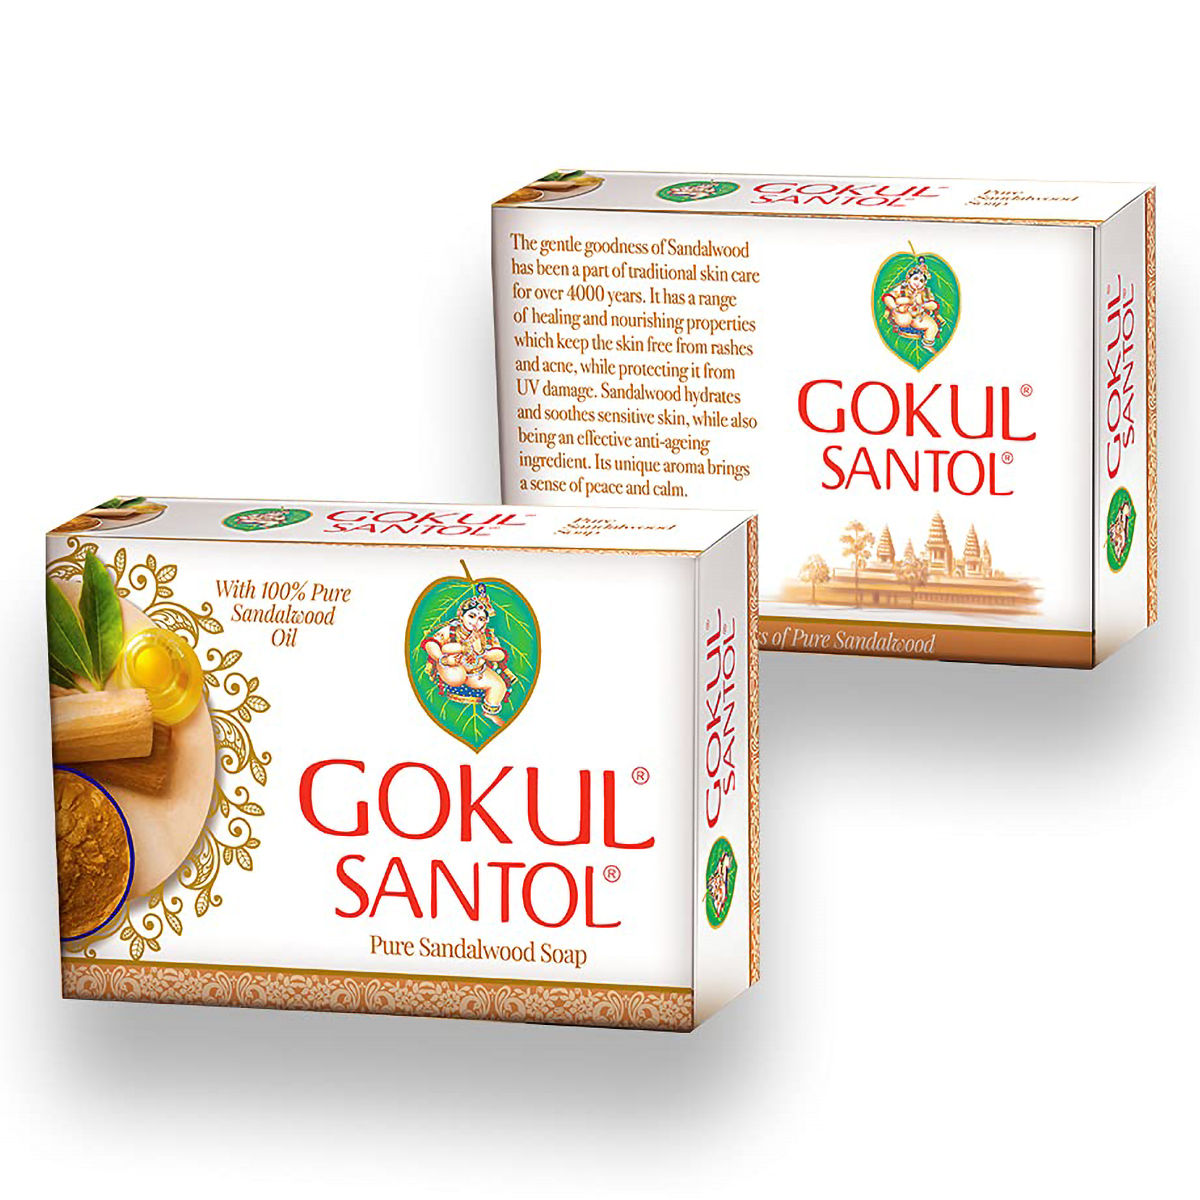 Buy Gokul Santol Cool Talc Online at Best Price of Rs 130 - bigbasket